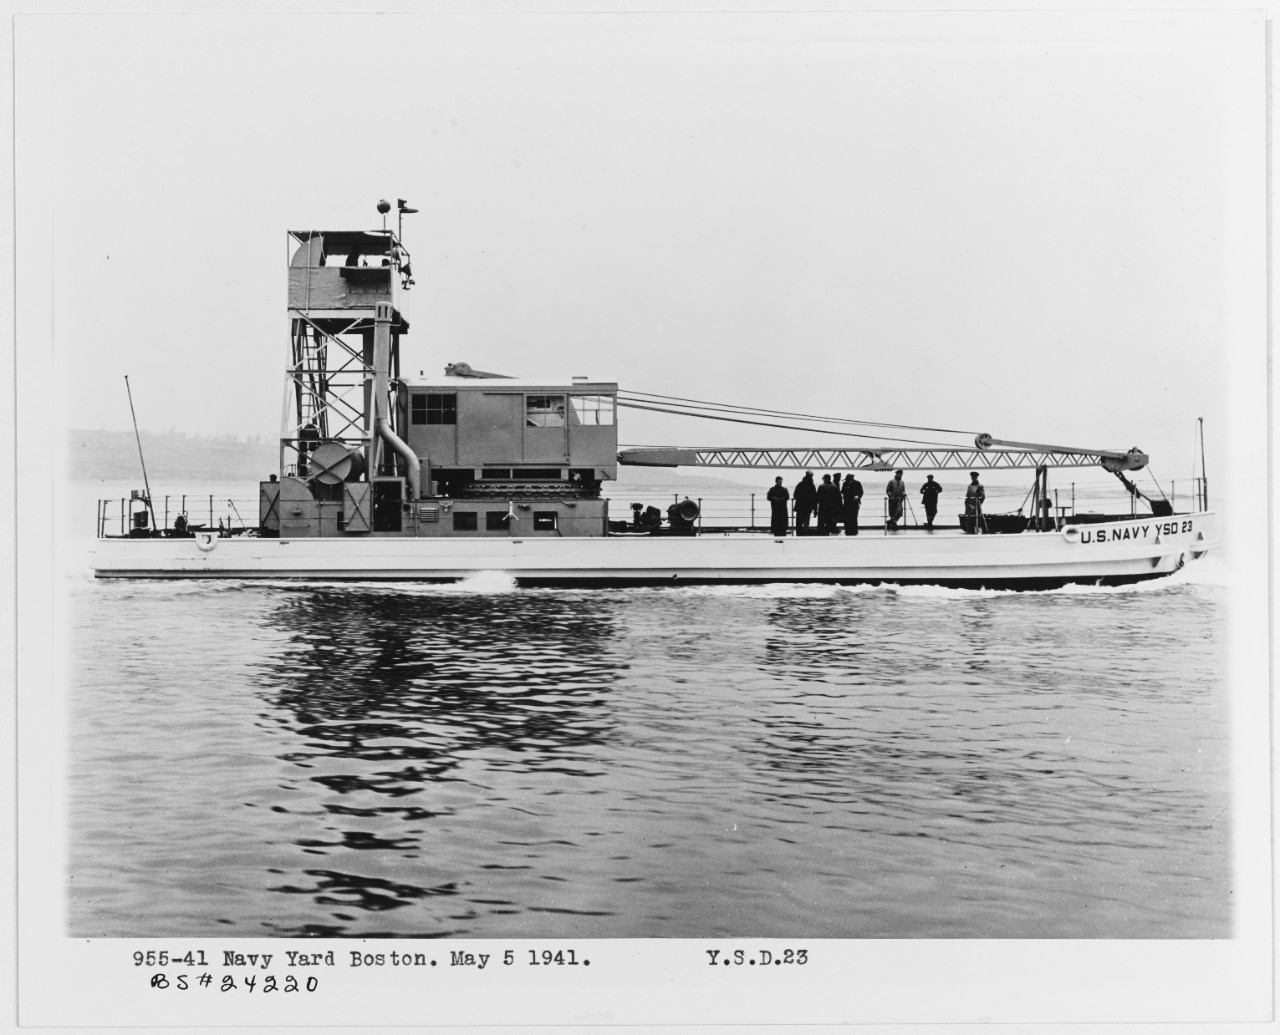 USS YSD-23